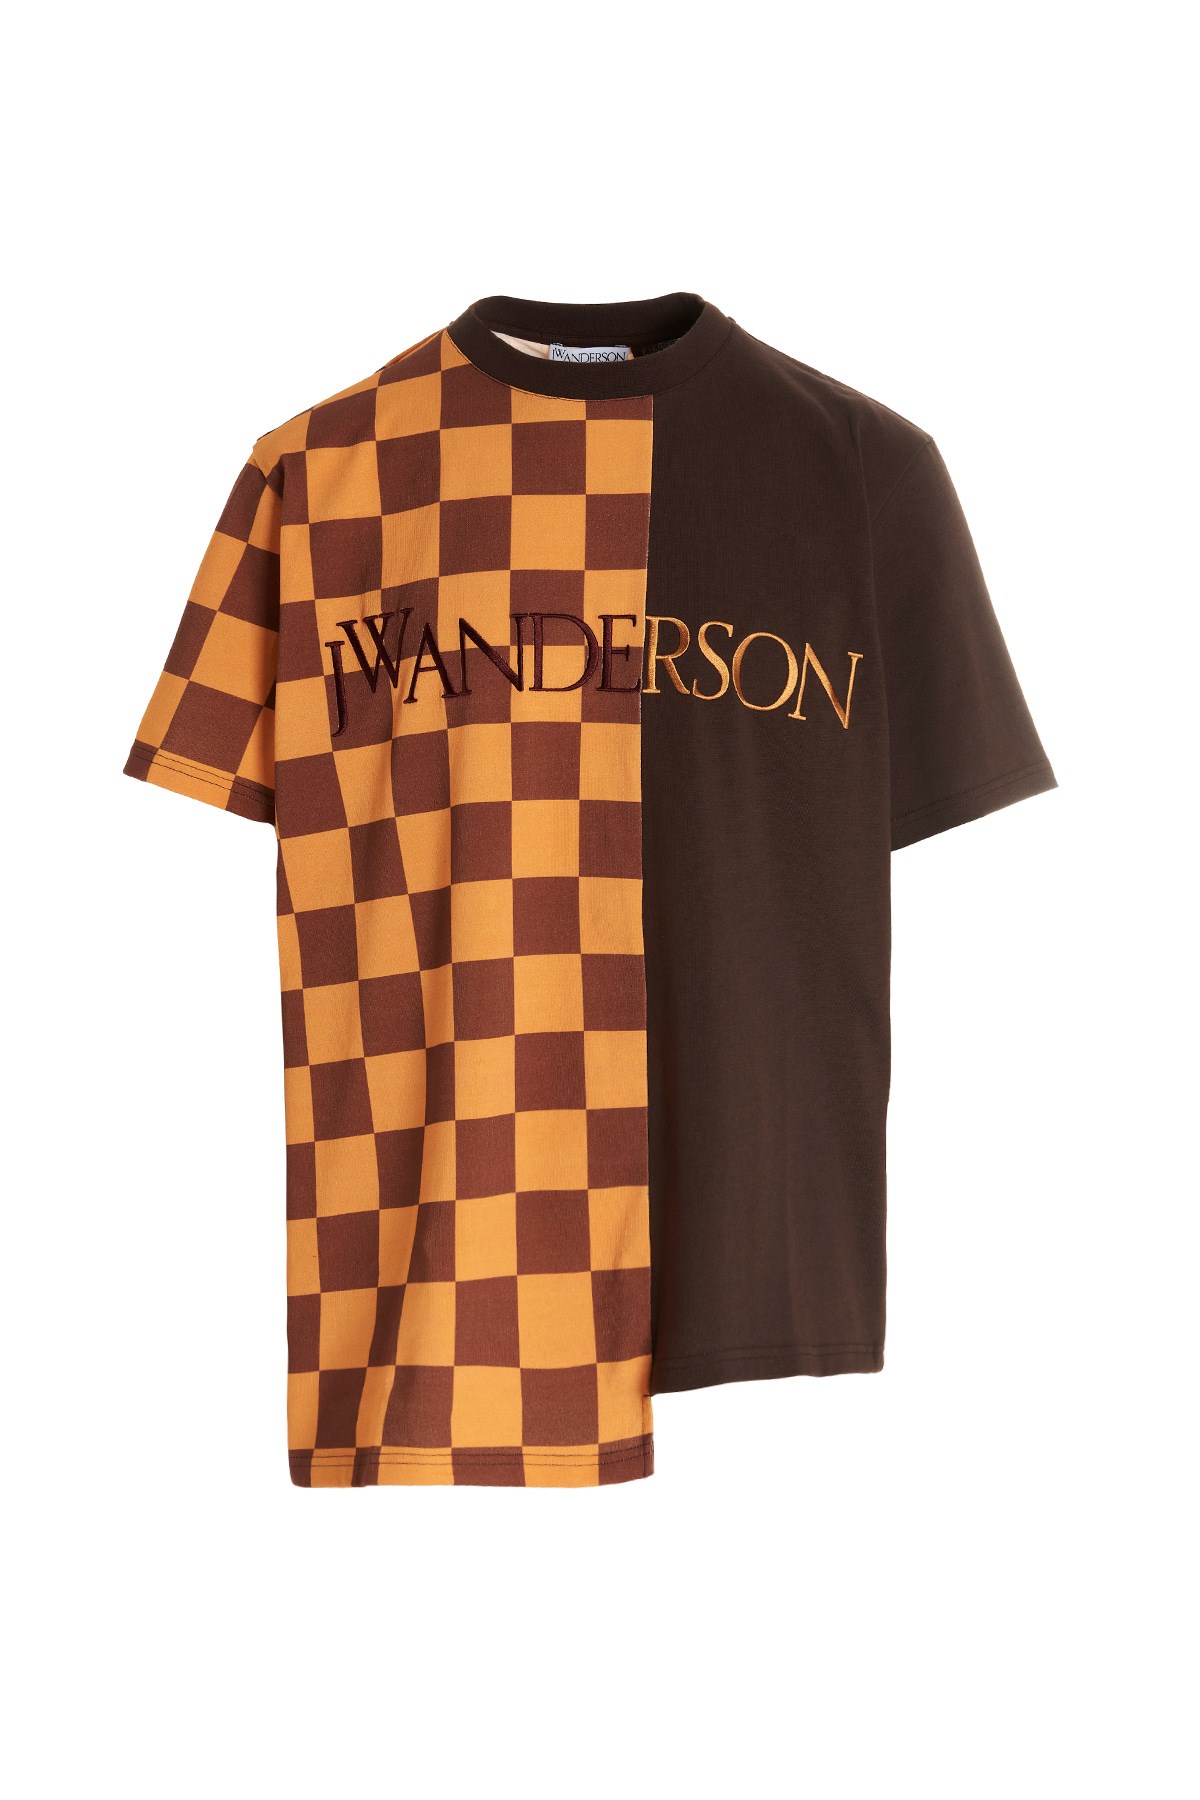 J.W.ANDERSON 'Checkwork Patchwork’ T-Shirt